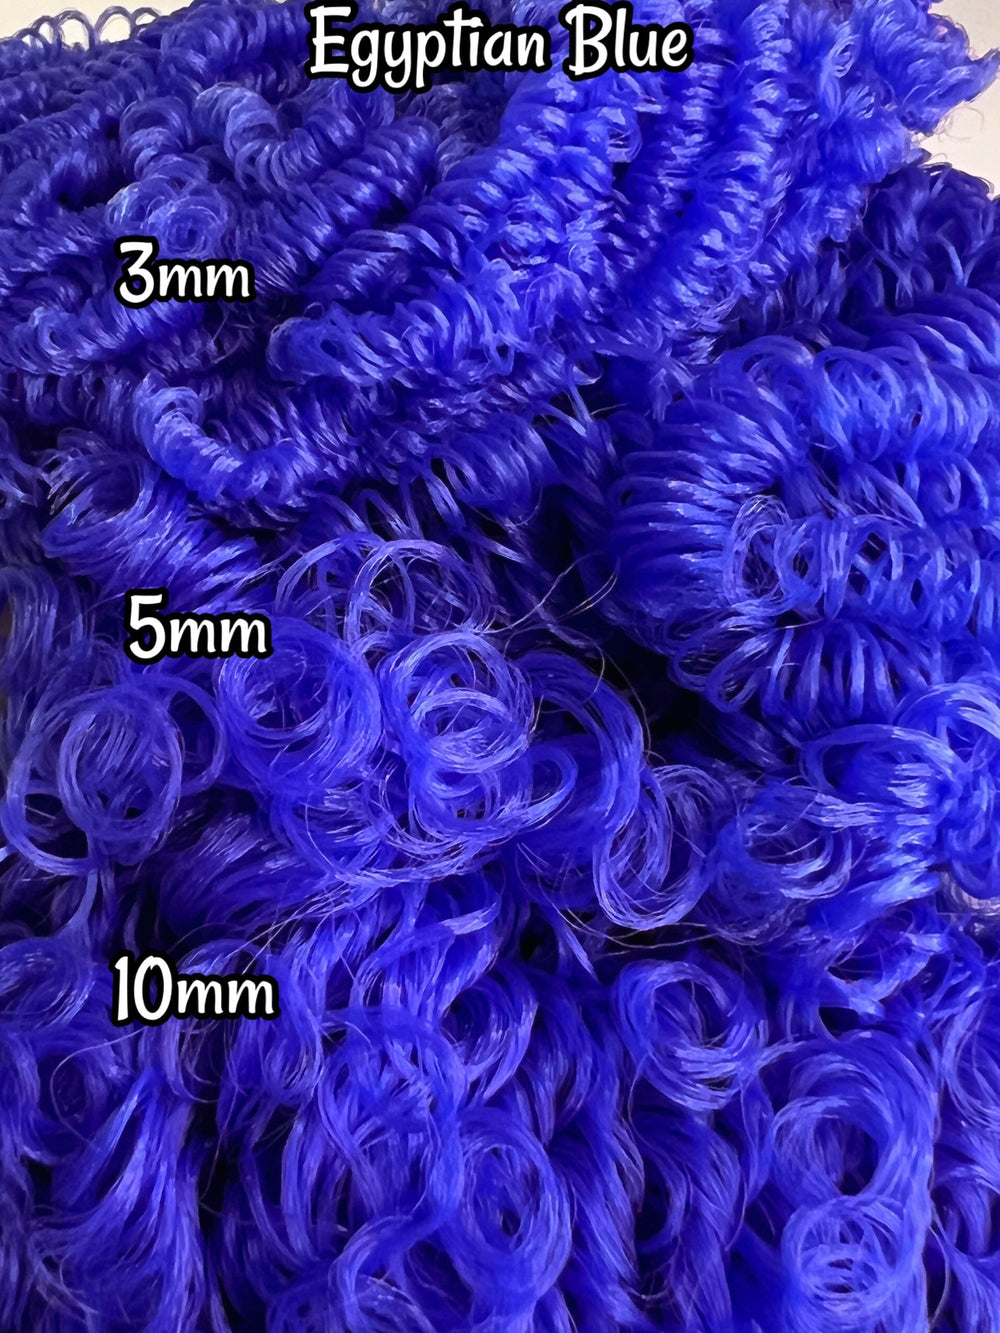 DG Curly Egyptian Blue N1896 3mm 5mm 10mm dark blue 36 inch 0.5oz/14g pre-curled Nylon Doll Hair for rerooting fashion dolls